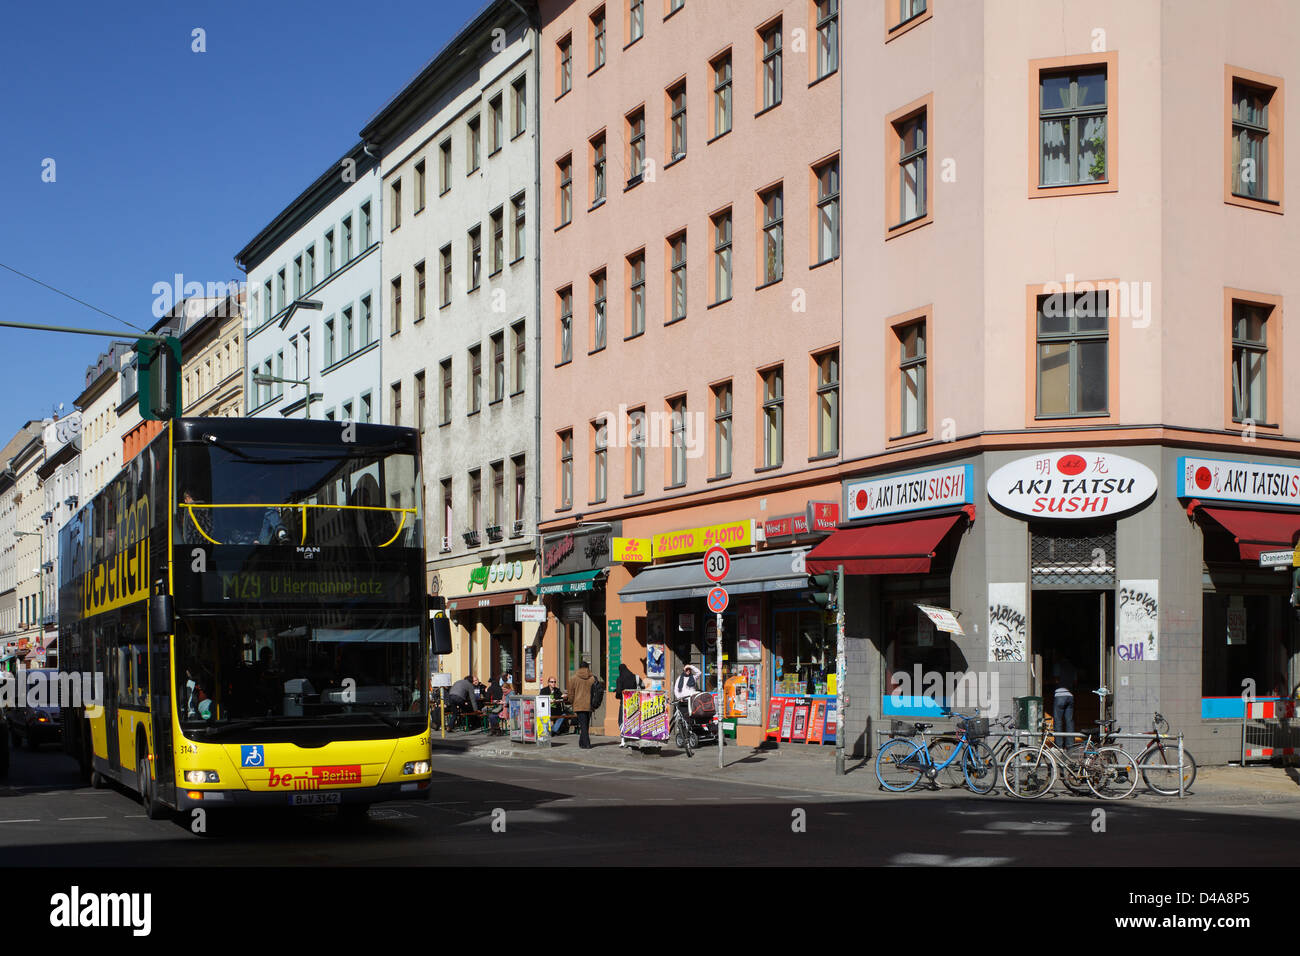 Berlin, Germany - M29 BVG double-decker bus in the Oranienstrasse Stock Photo